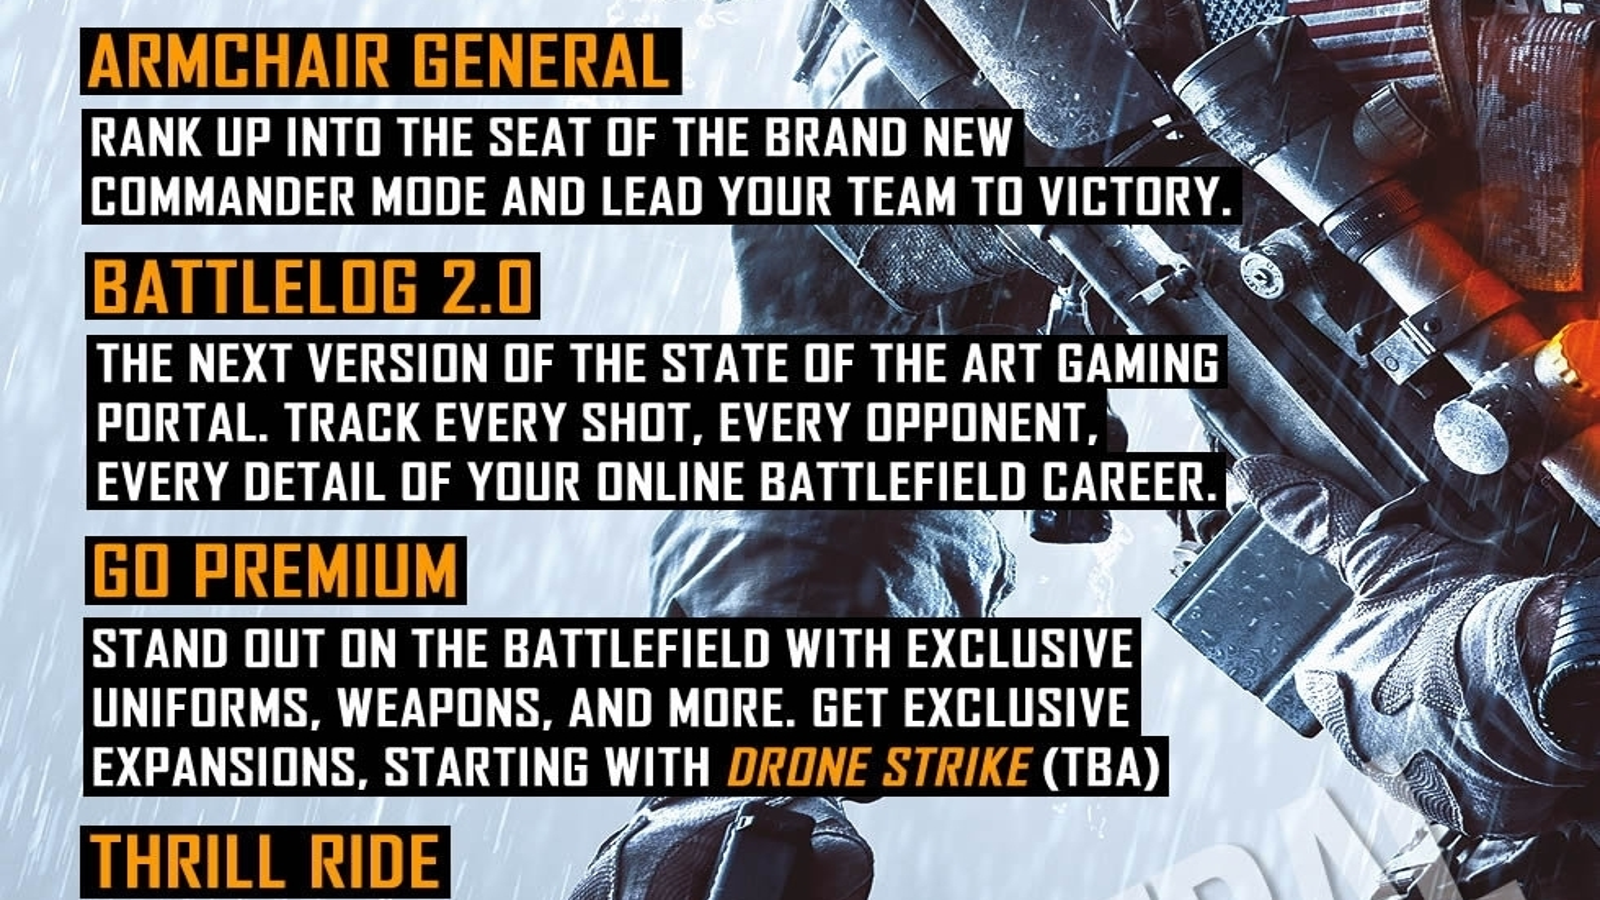 Battlelog Detailed for Battlefield 4